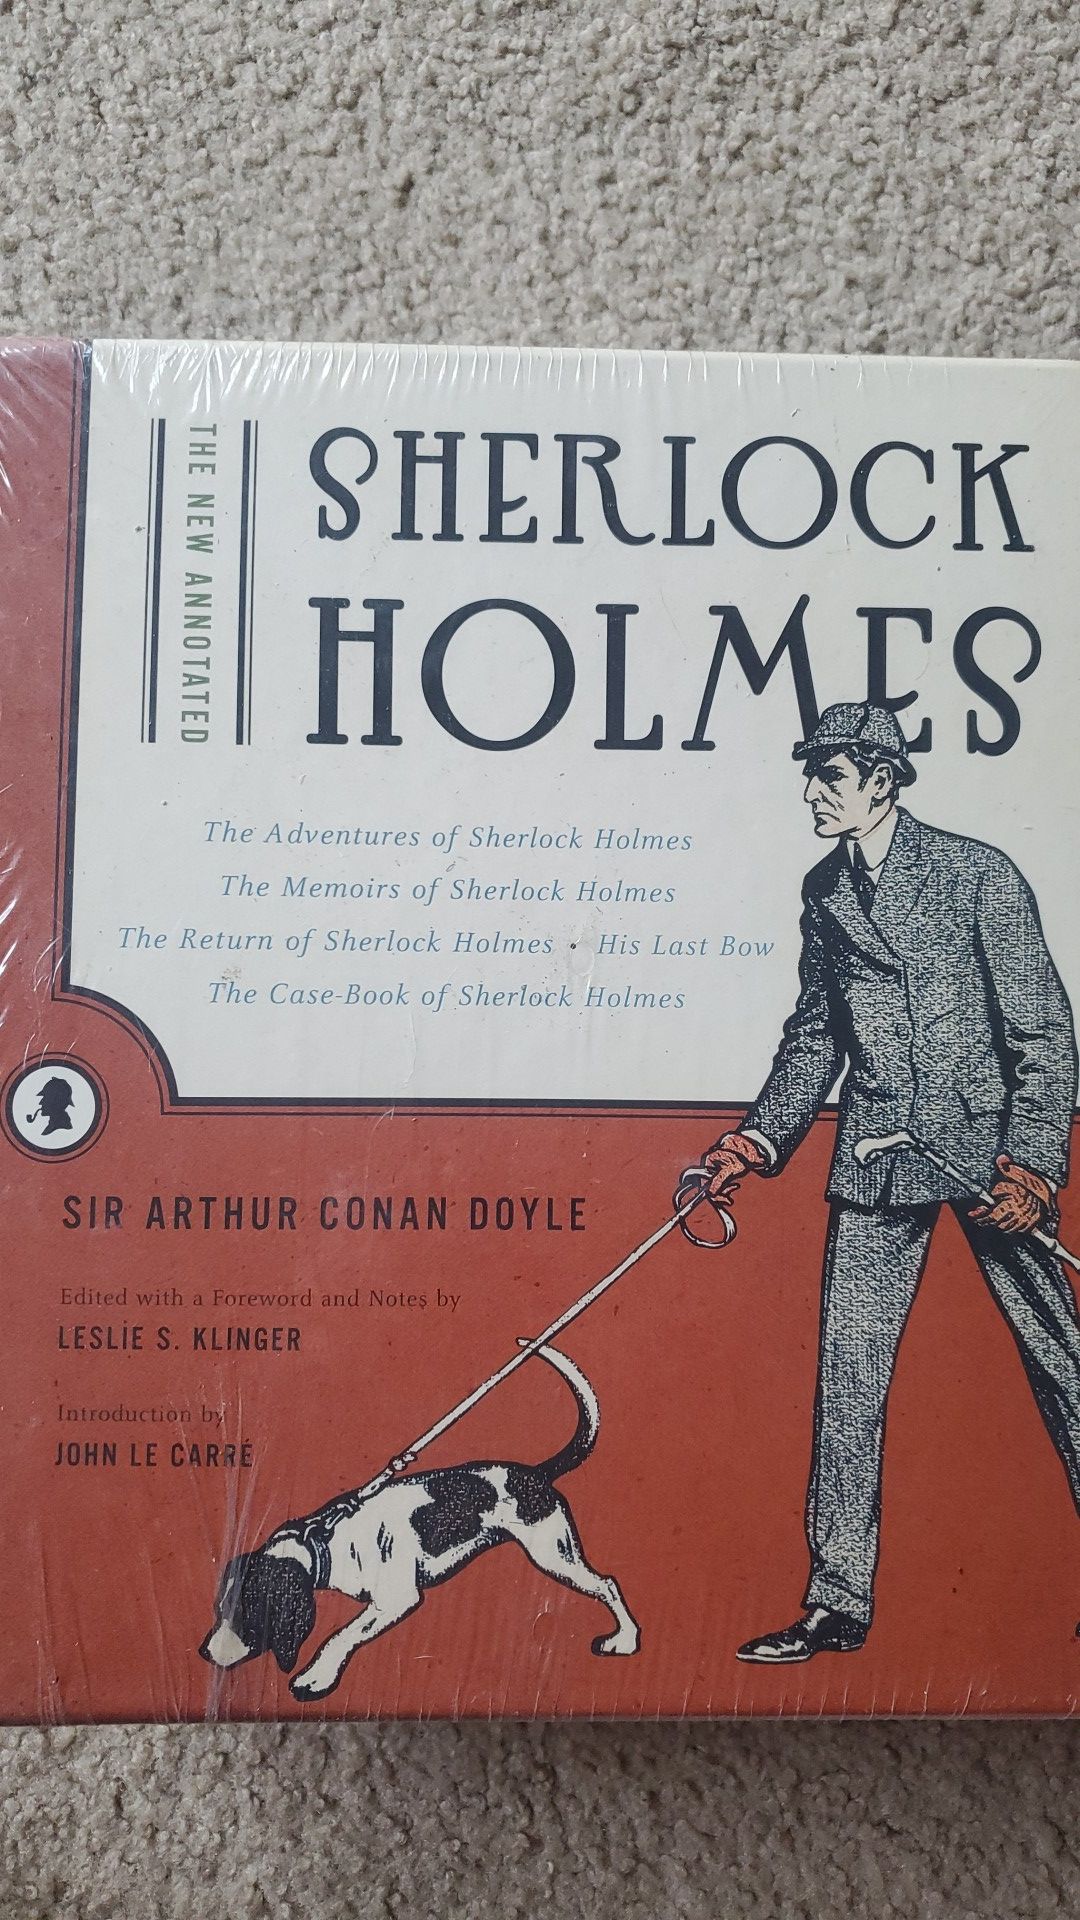 Sherlock Holmes book set, the new annotated by Sir Arthur Conan Doyle